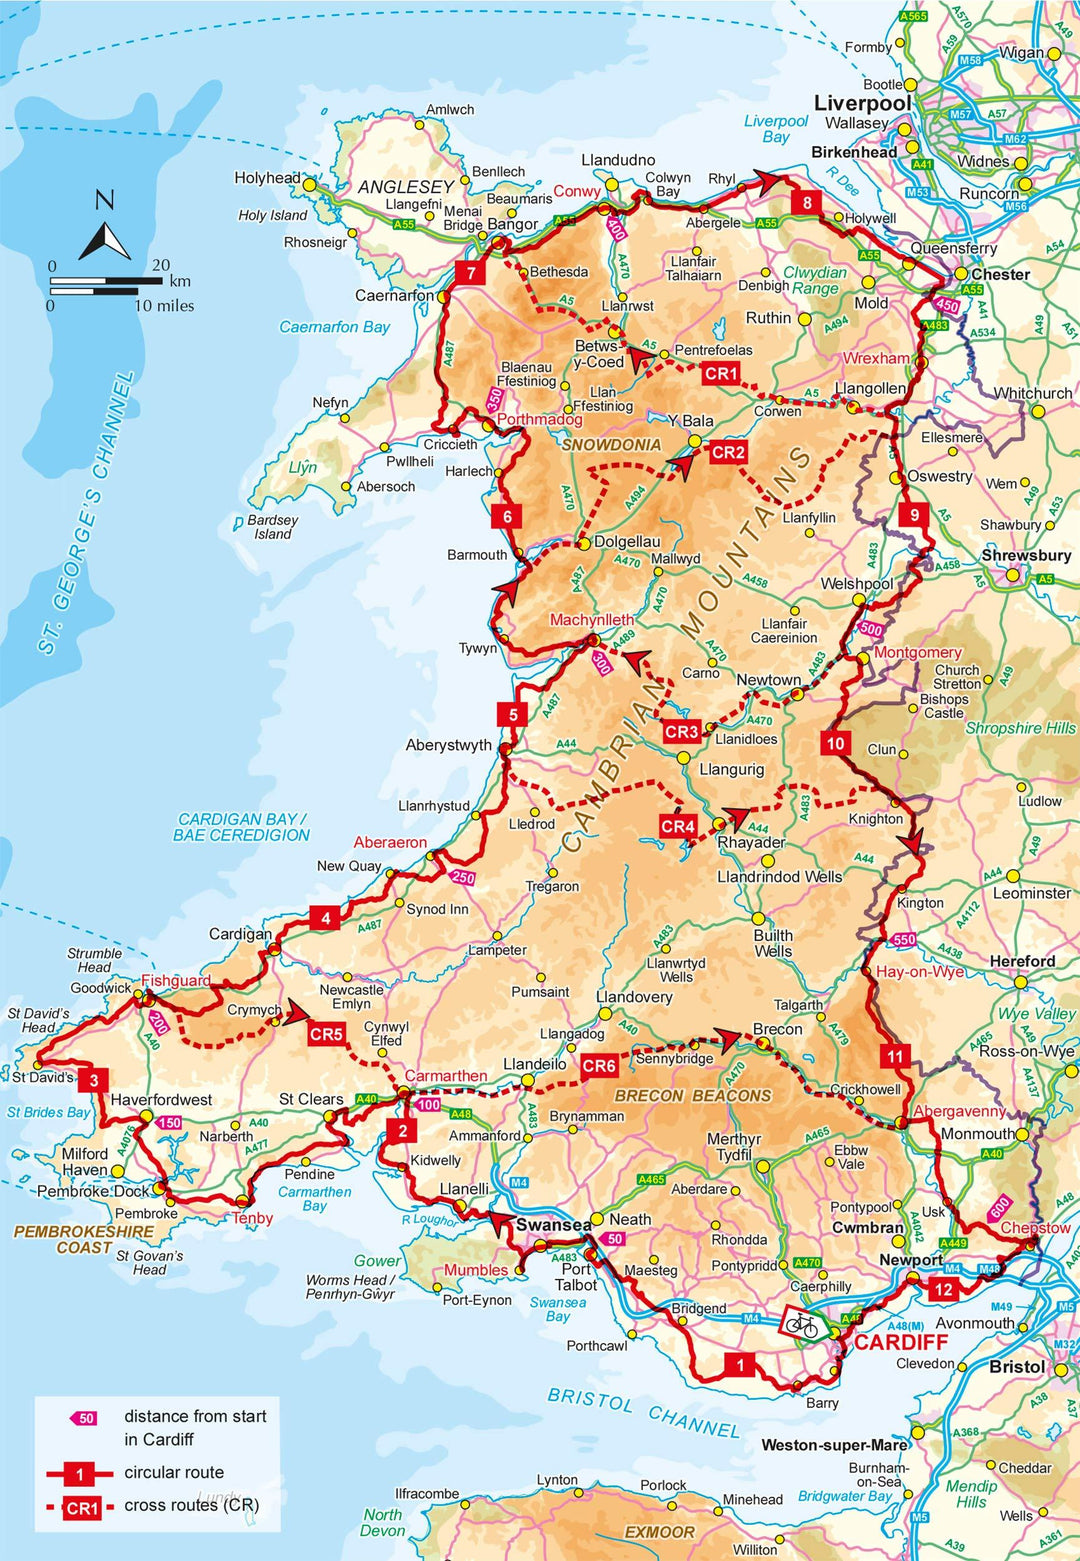 Guide vélo (en anglais) - Pays de Galles | Cicerone guide vélo Cicerone 